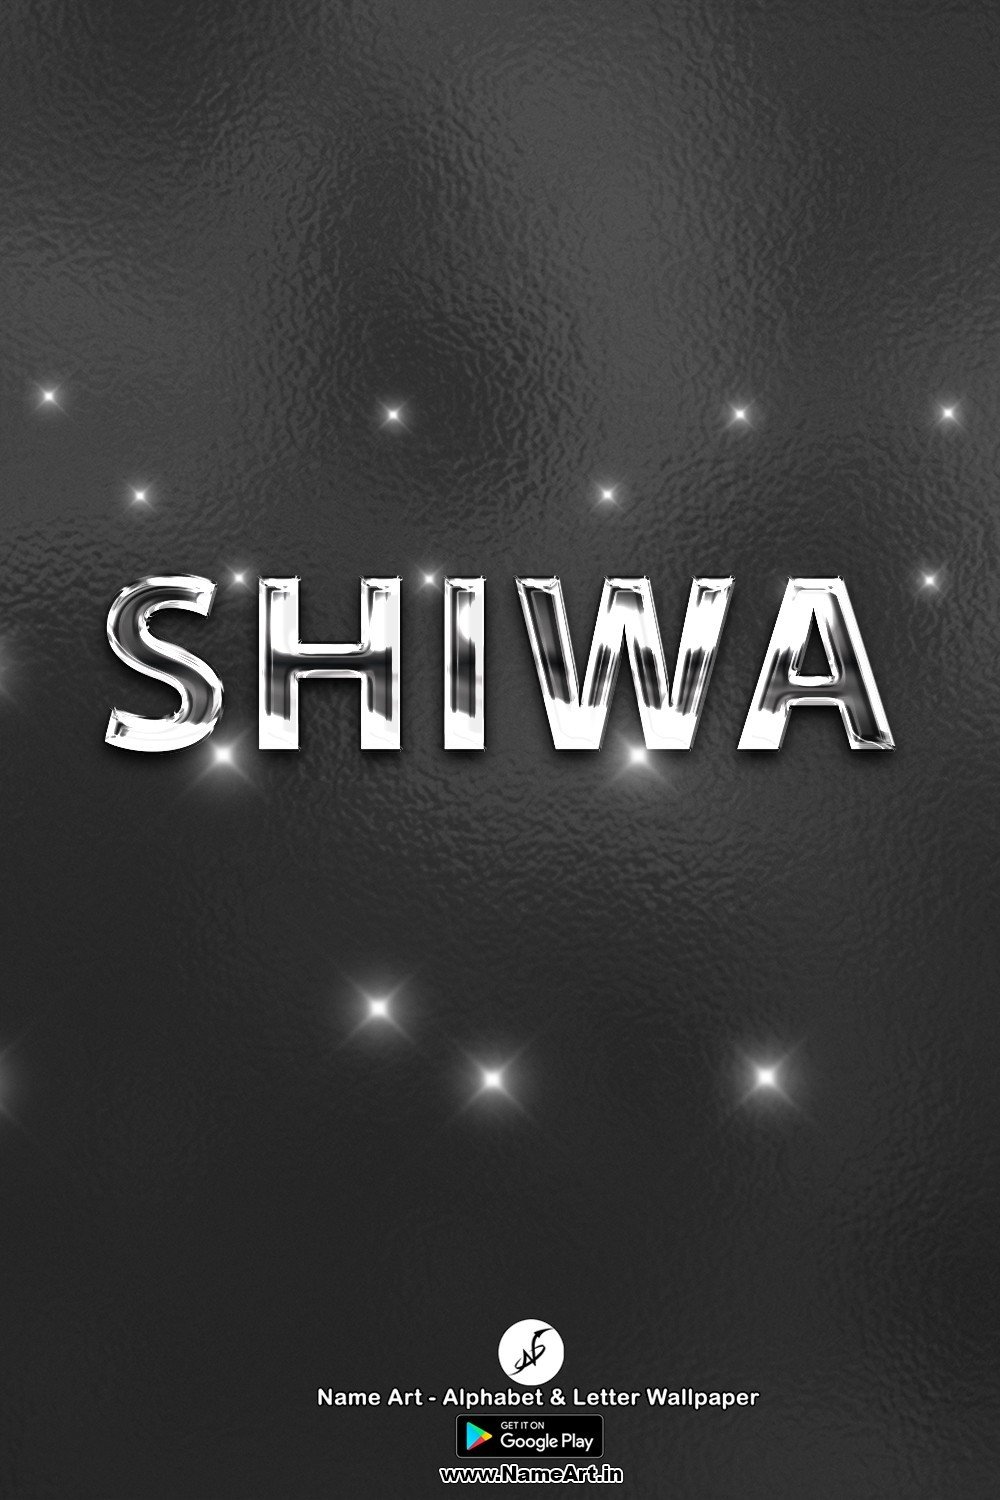 Shiwa | Whatsapp Status Shiwa | Happy Birthday To You !! | Shiwa New Whatsapp Status images |